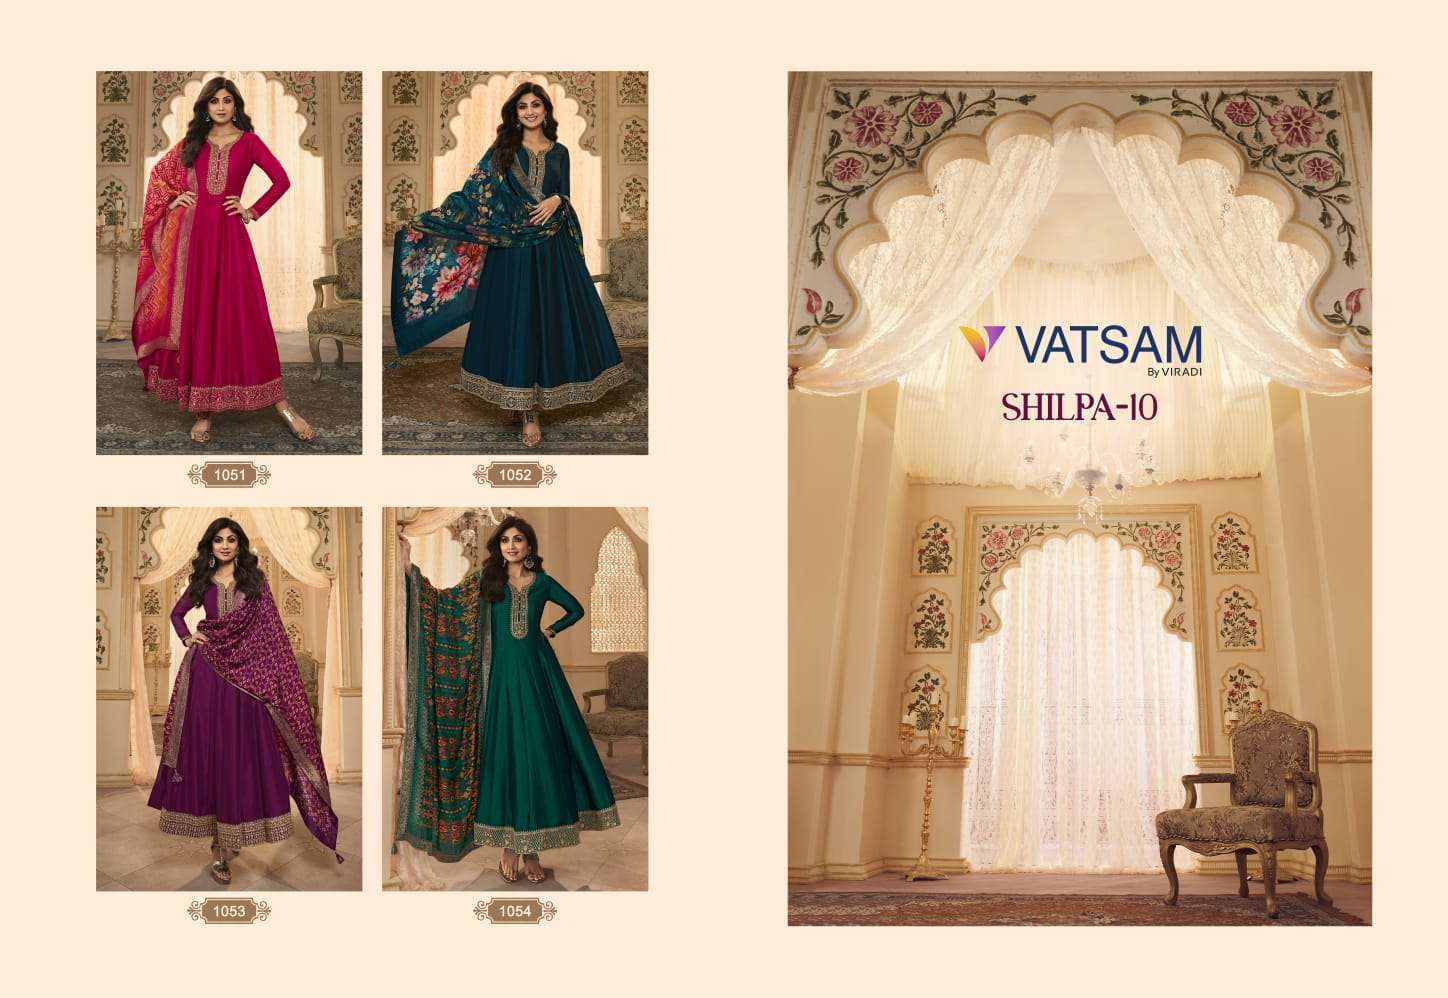 Shilpa Vol 10 Buy Viradi Vatsam Wholesale Online Lowest Price Kurta Dupatta Sets